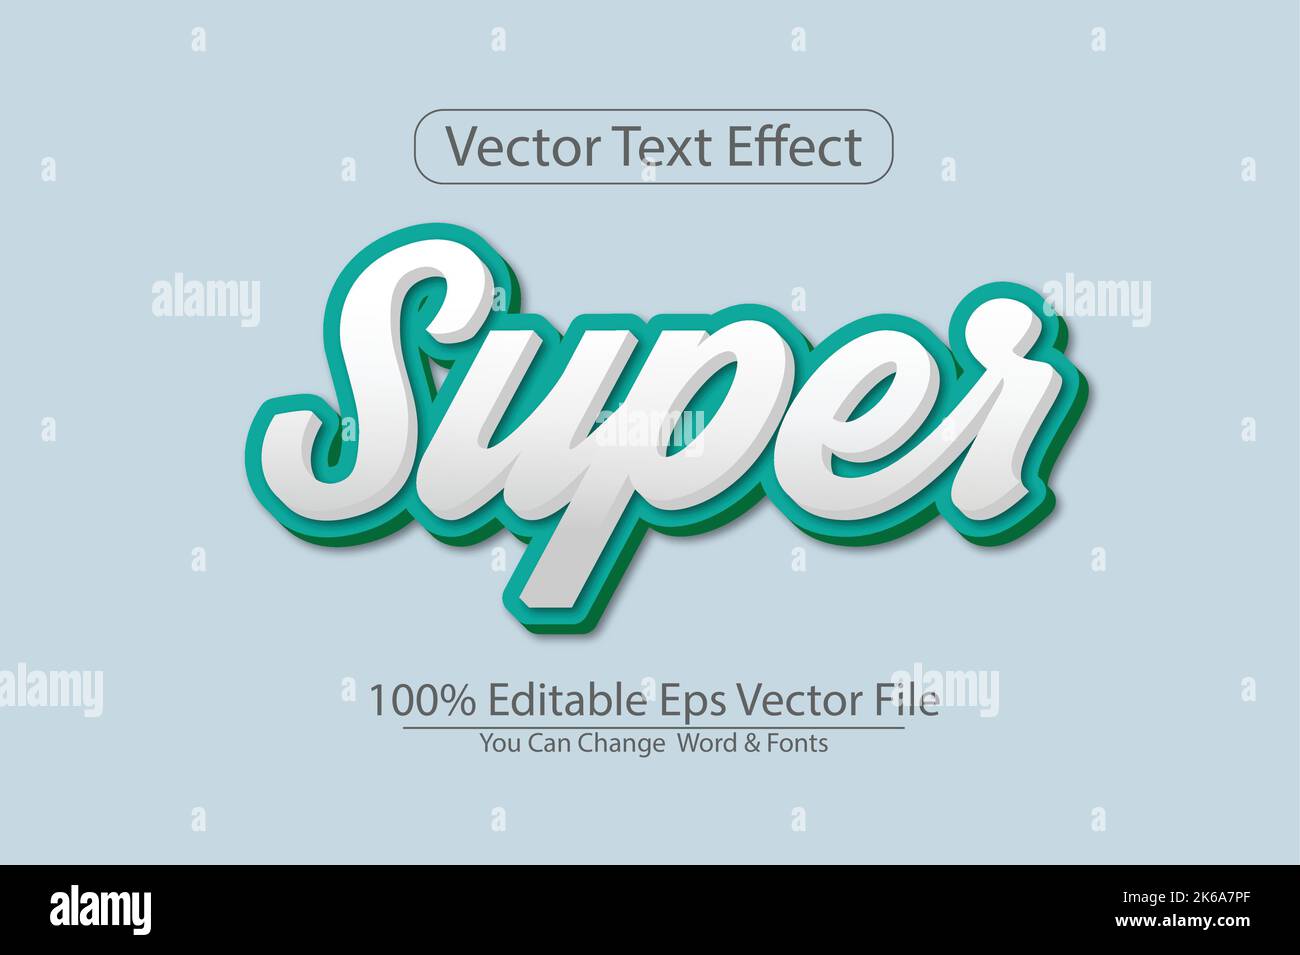 Editable 3d text effect vector design Stock Vector